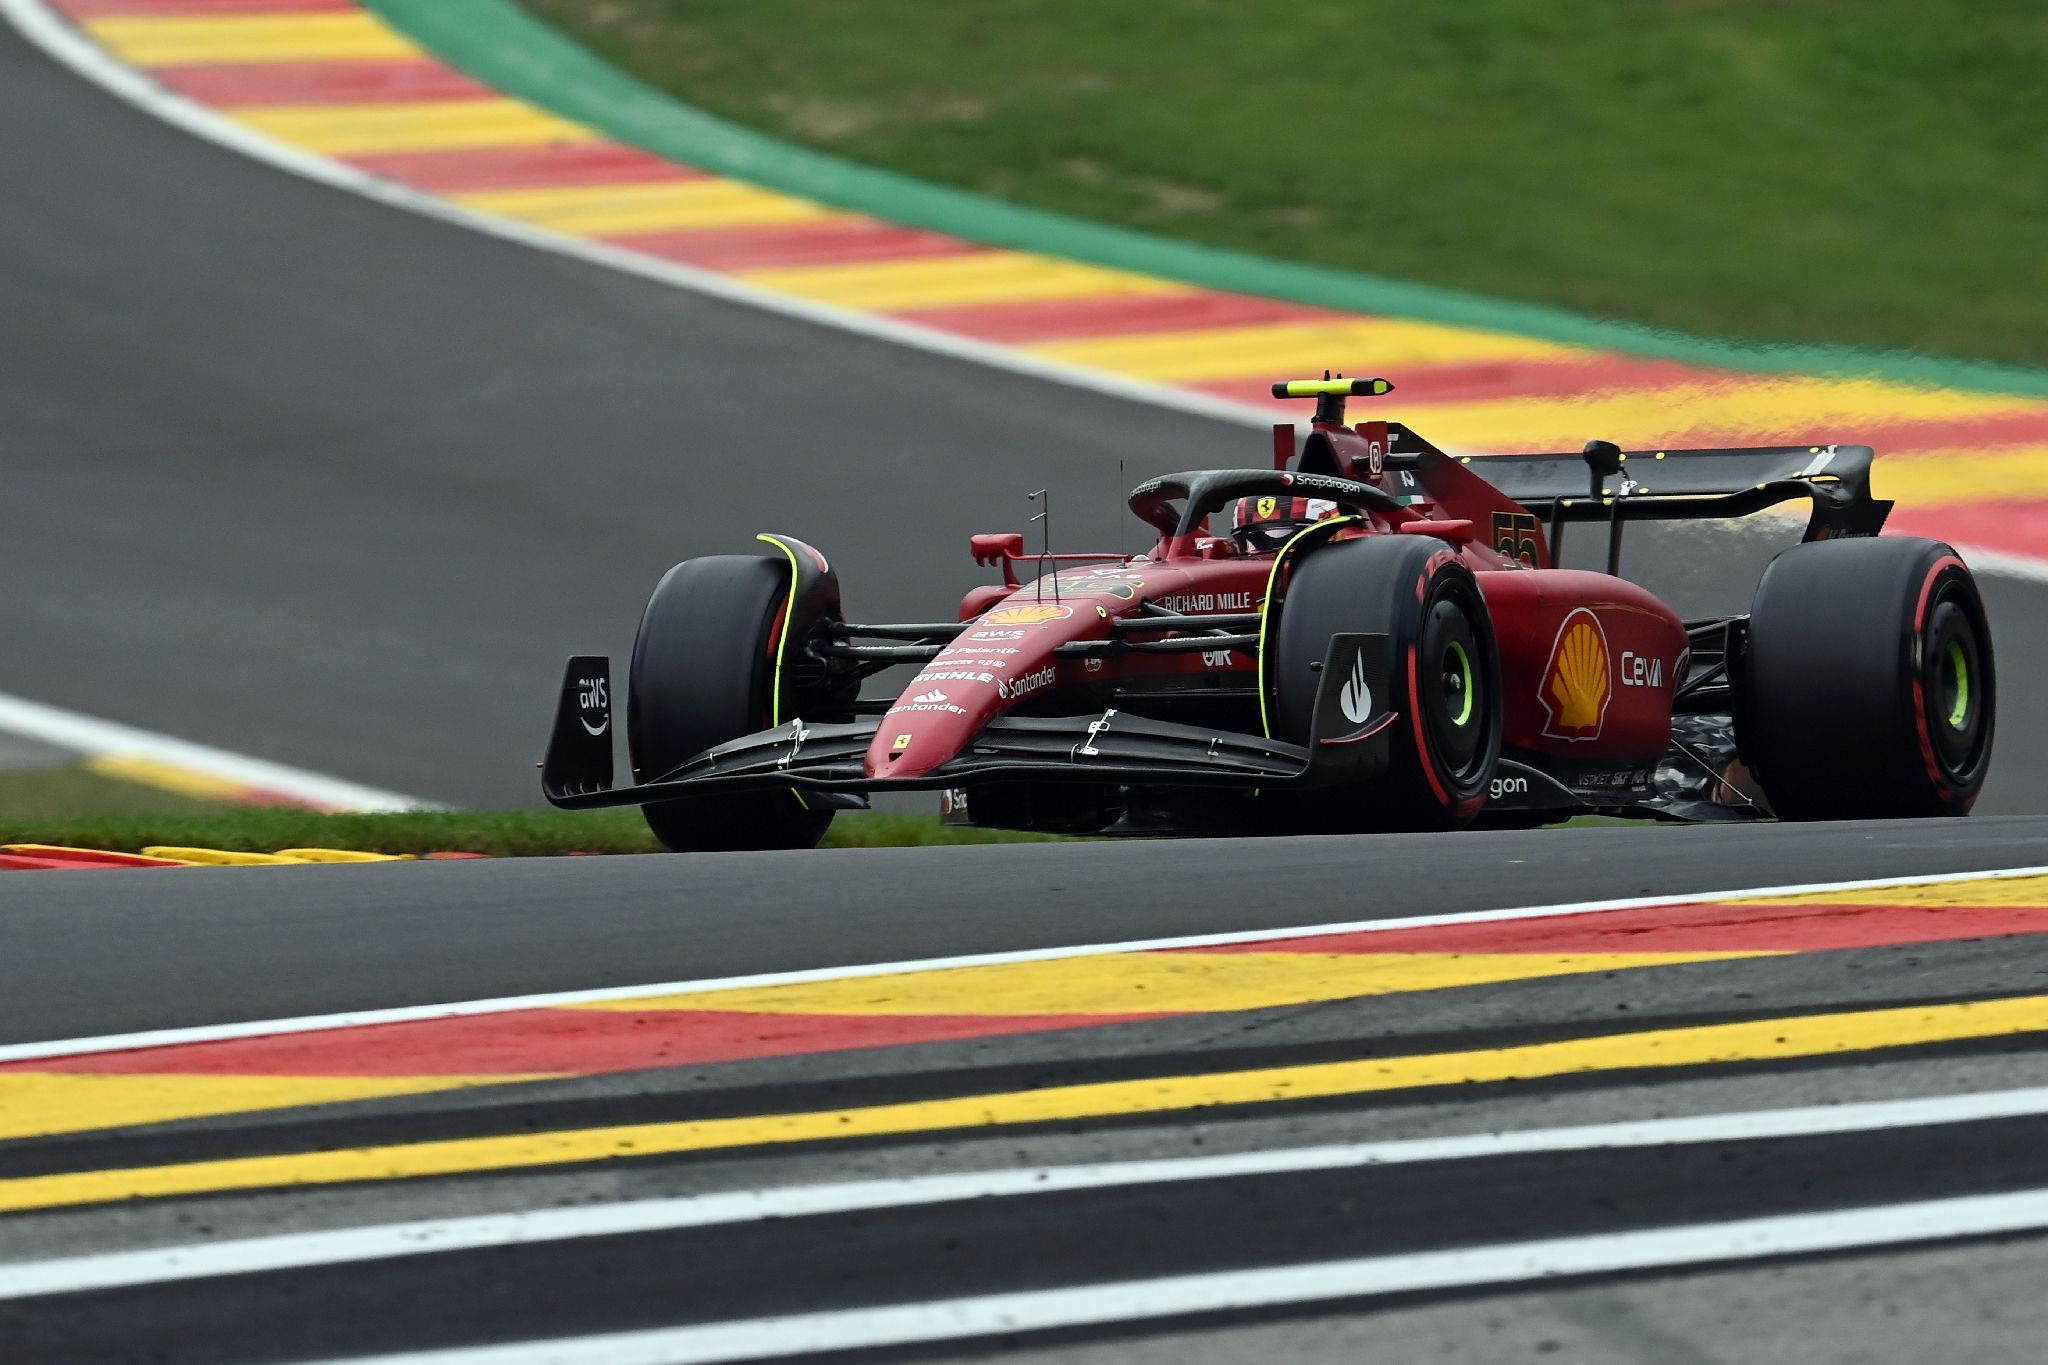 Grand Prix de Belgique de F1 : Charles Leclerc pénalisé après la